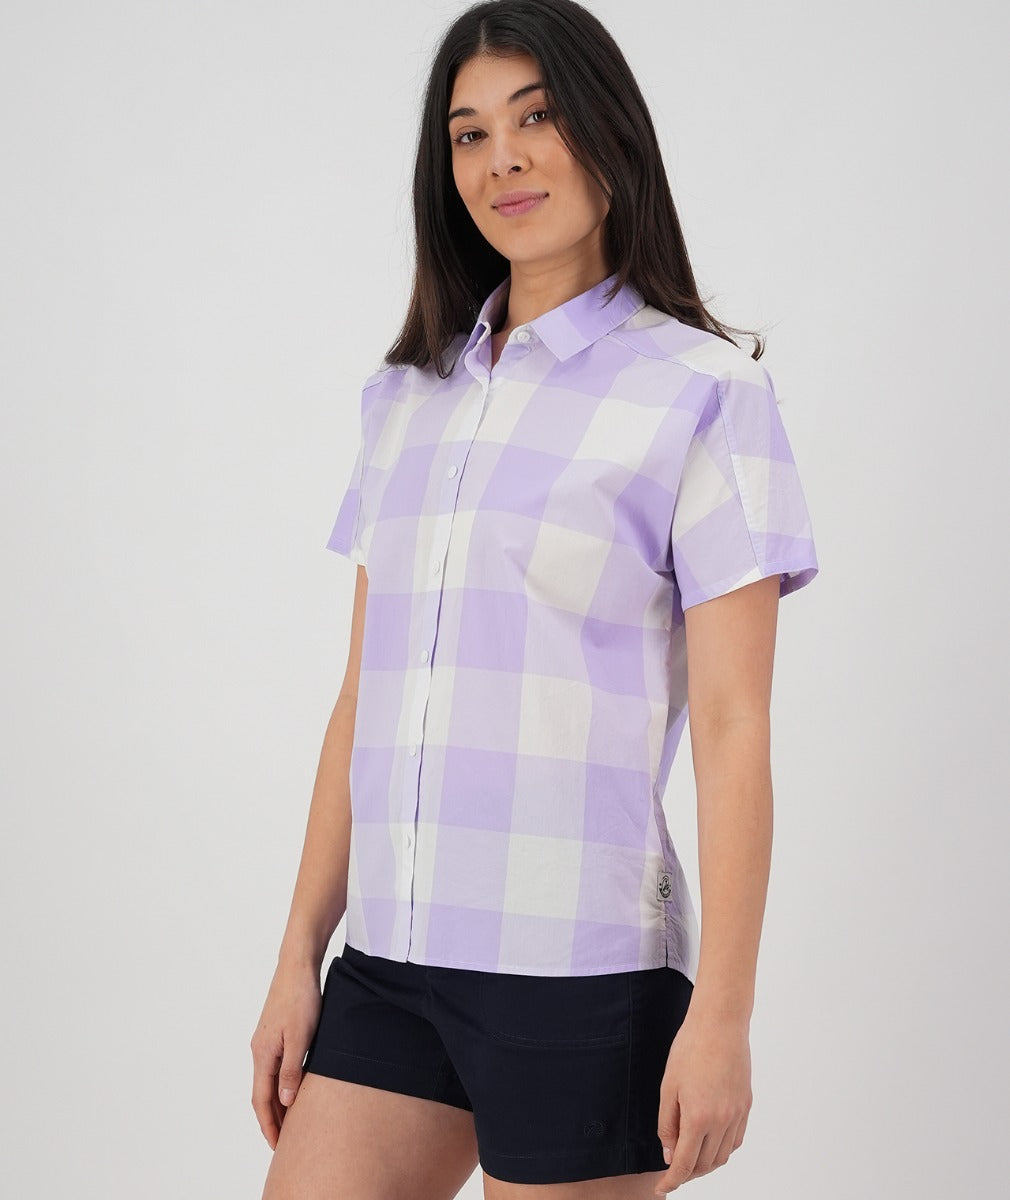 Manaia Short Sleeve Shirt | Lavender Check - Swanndri - Beechworth Emporium